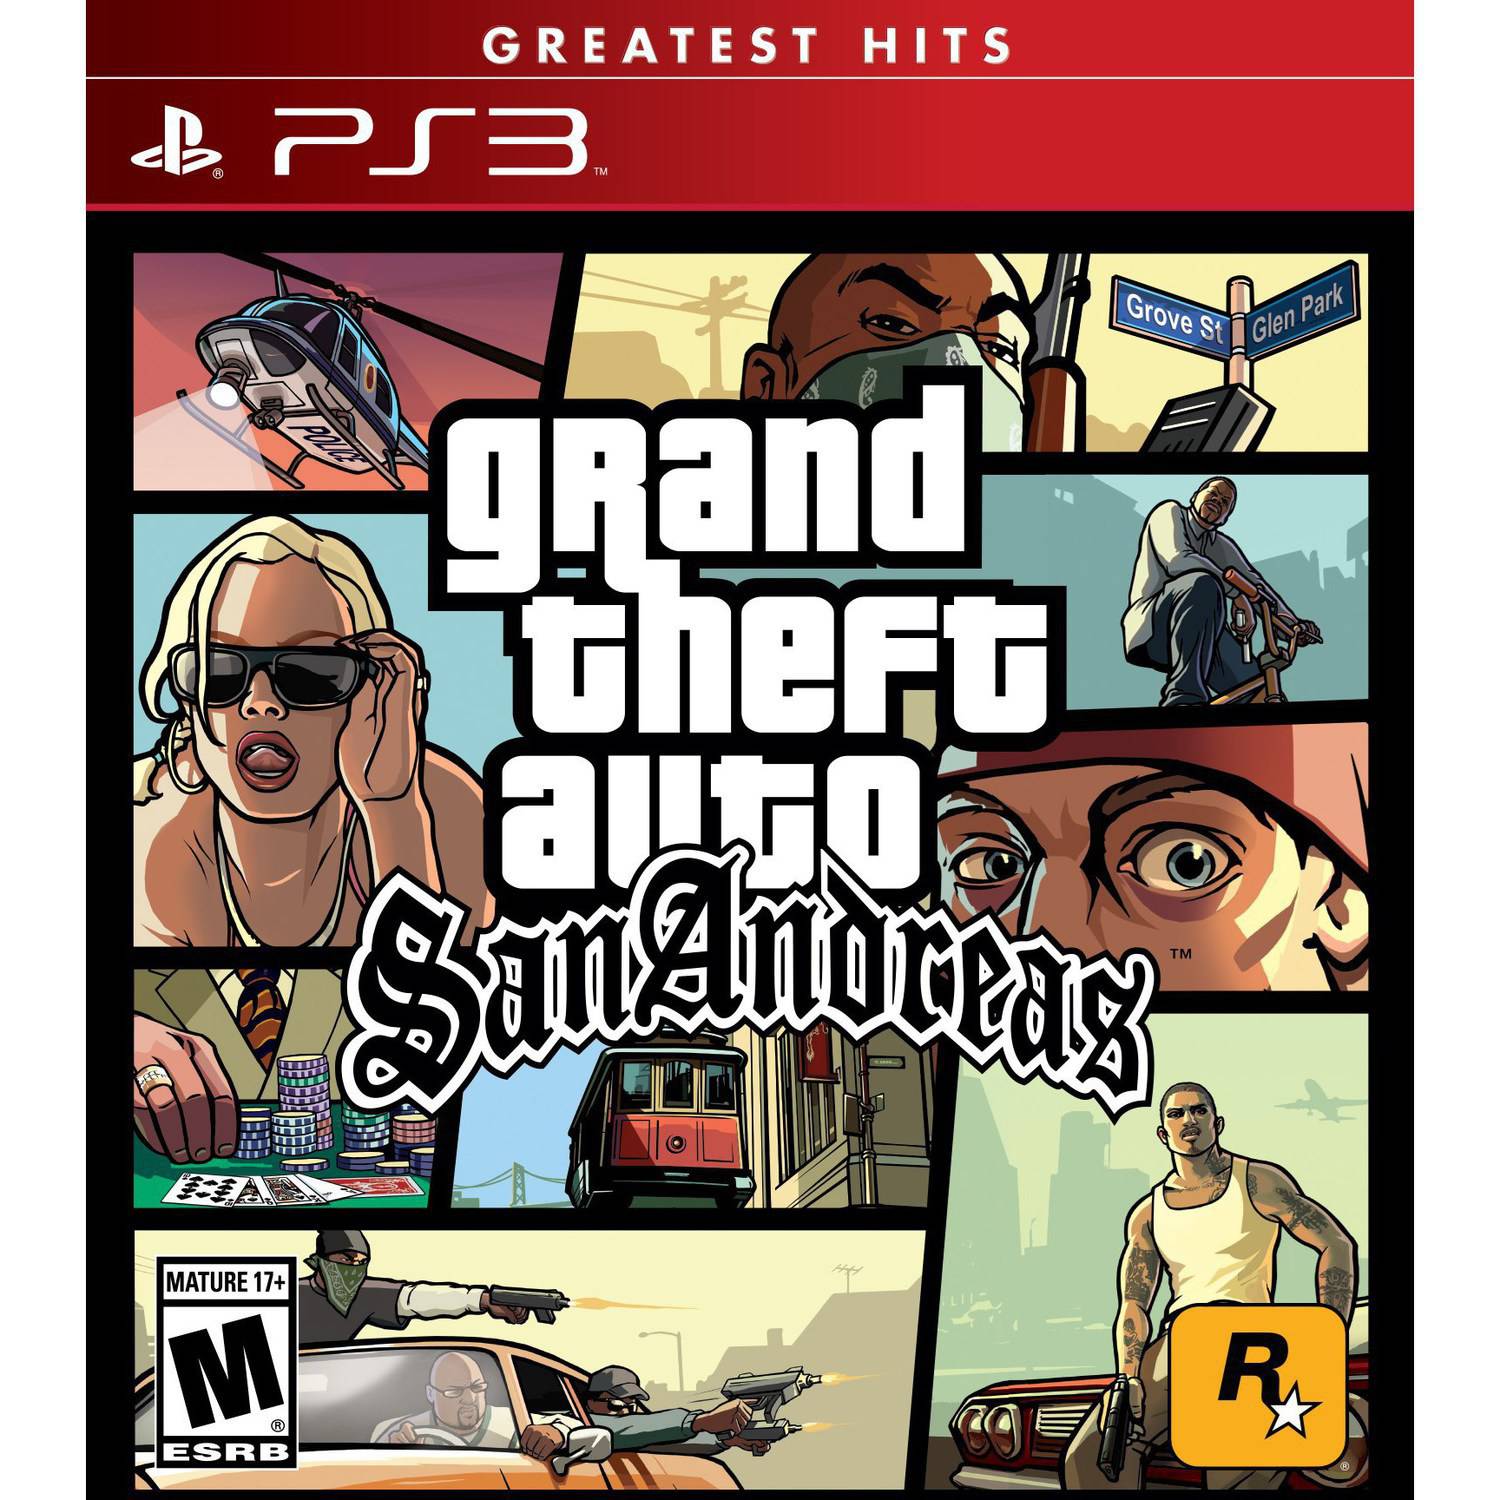 Grand Theft Auto: San Andreas, Rockstar Games, PlayStation 3, 710425476938 - image 2 of 8